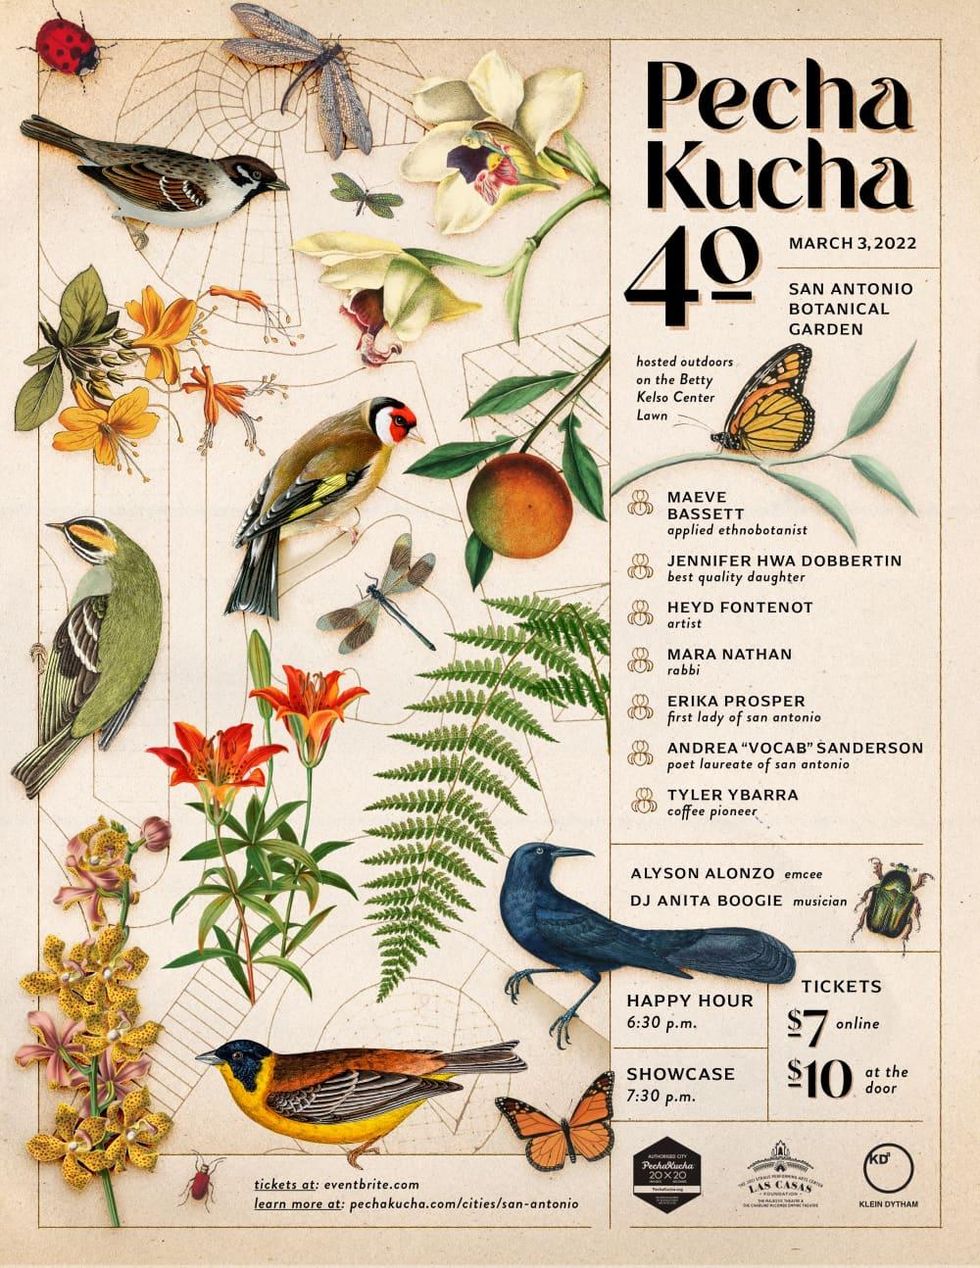 A flyer for PechaKucha Night at the San Antonio Botanical Garden.